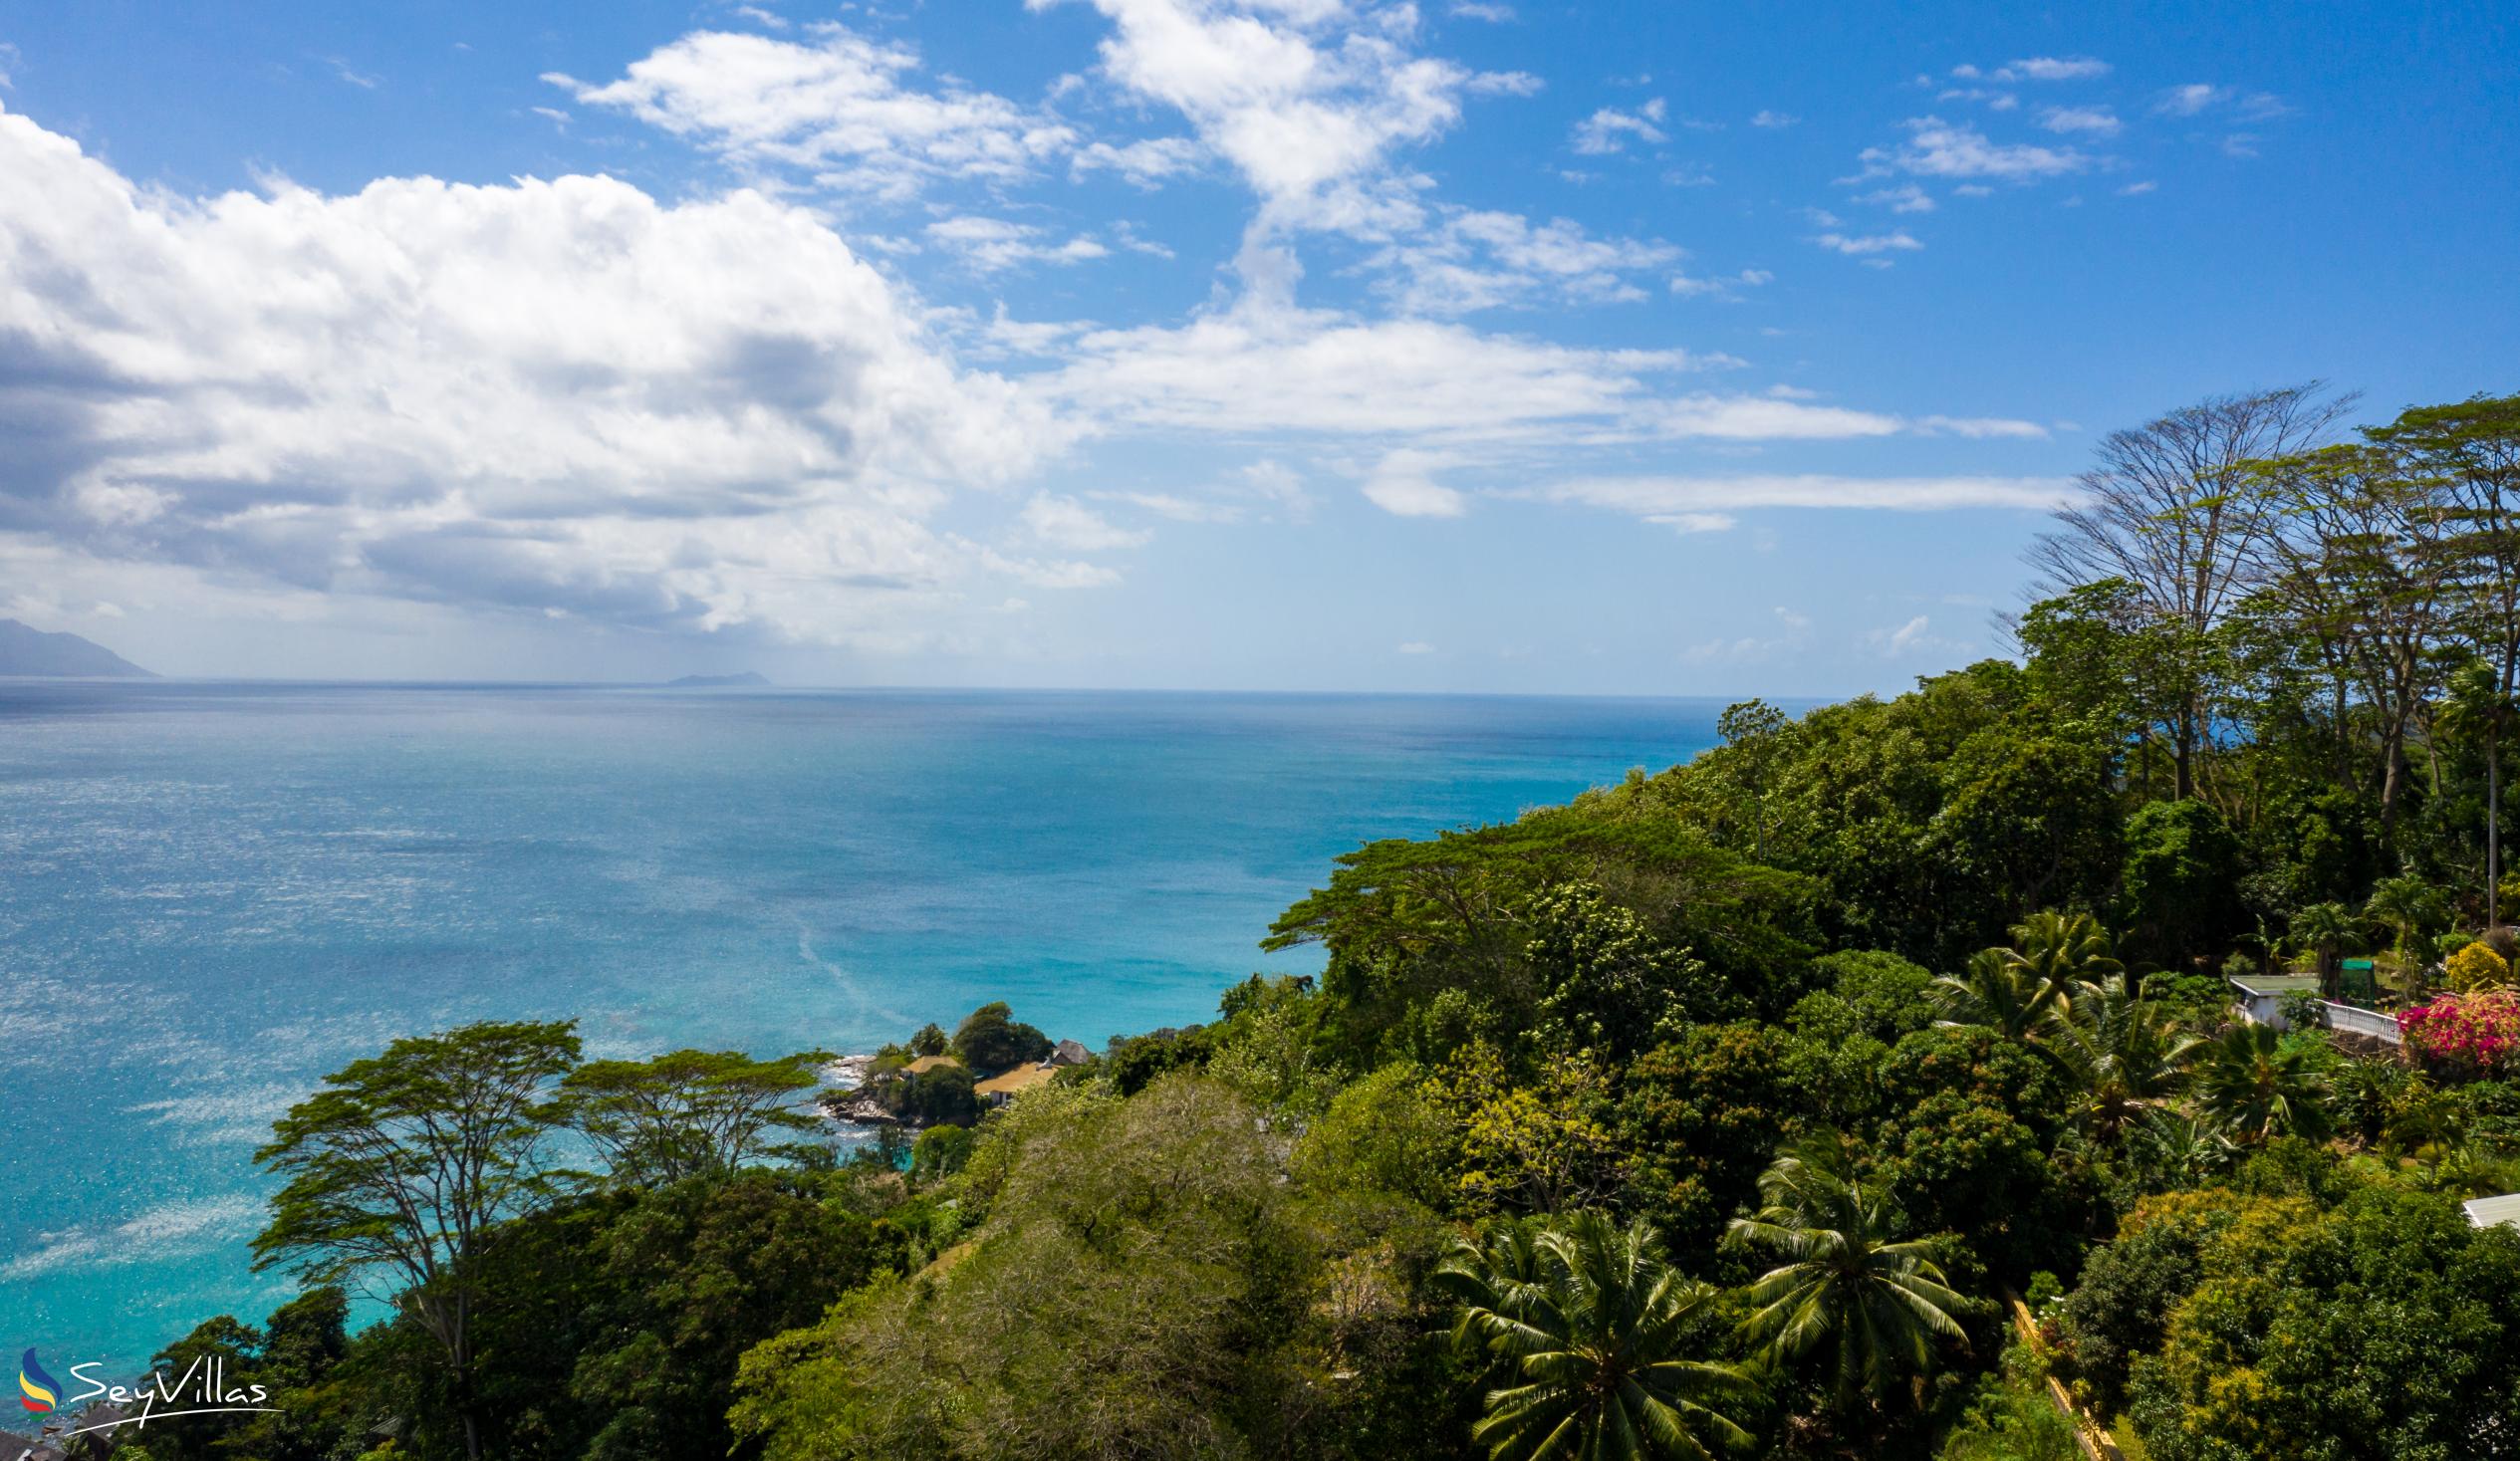 Foto 21: Reve Bleu - Posizione - Mahé (Seychelles)